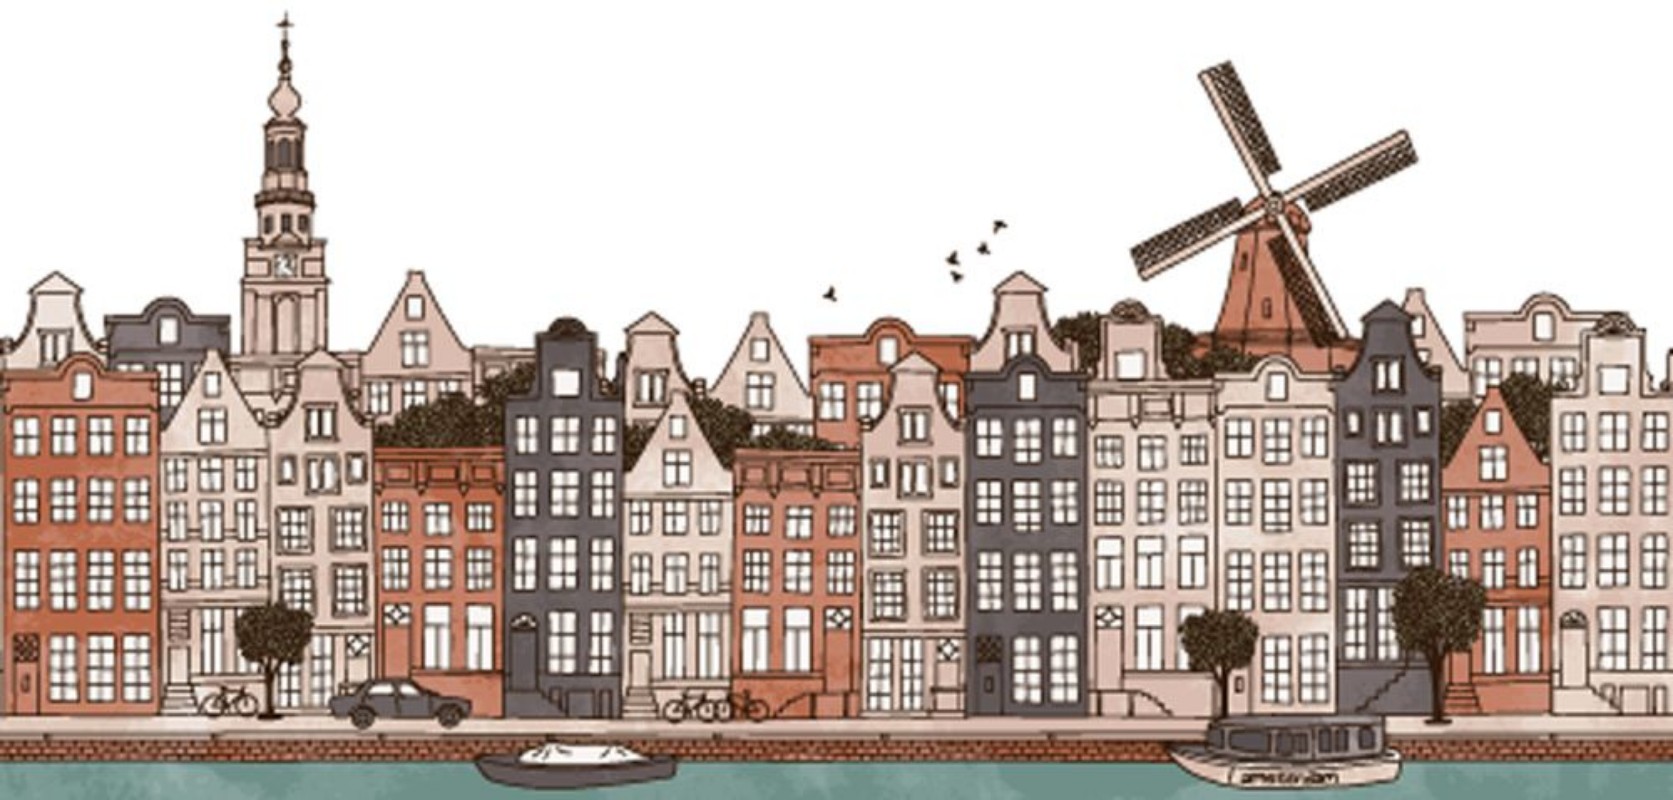 Afbeeldingen van Amsterdam Netherlands - seamless banner of Amsterdams skyline hand drawn and digitally colored ink illustration